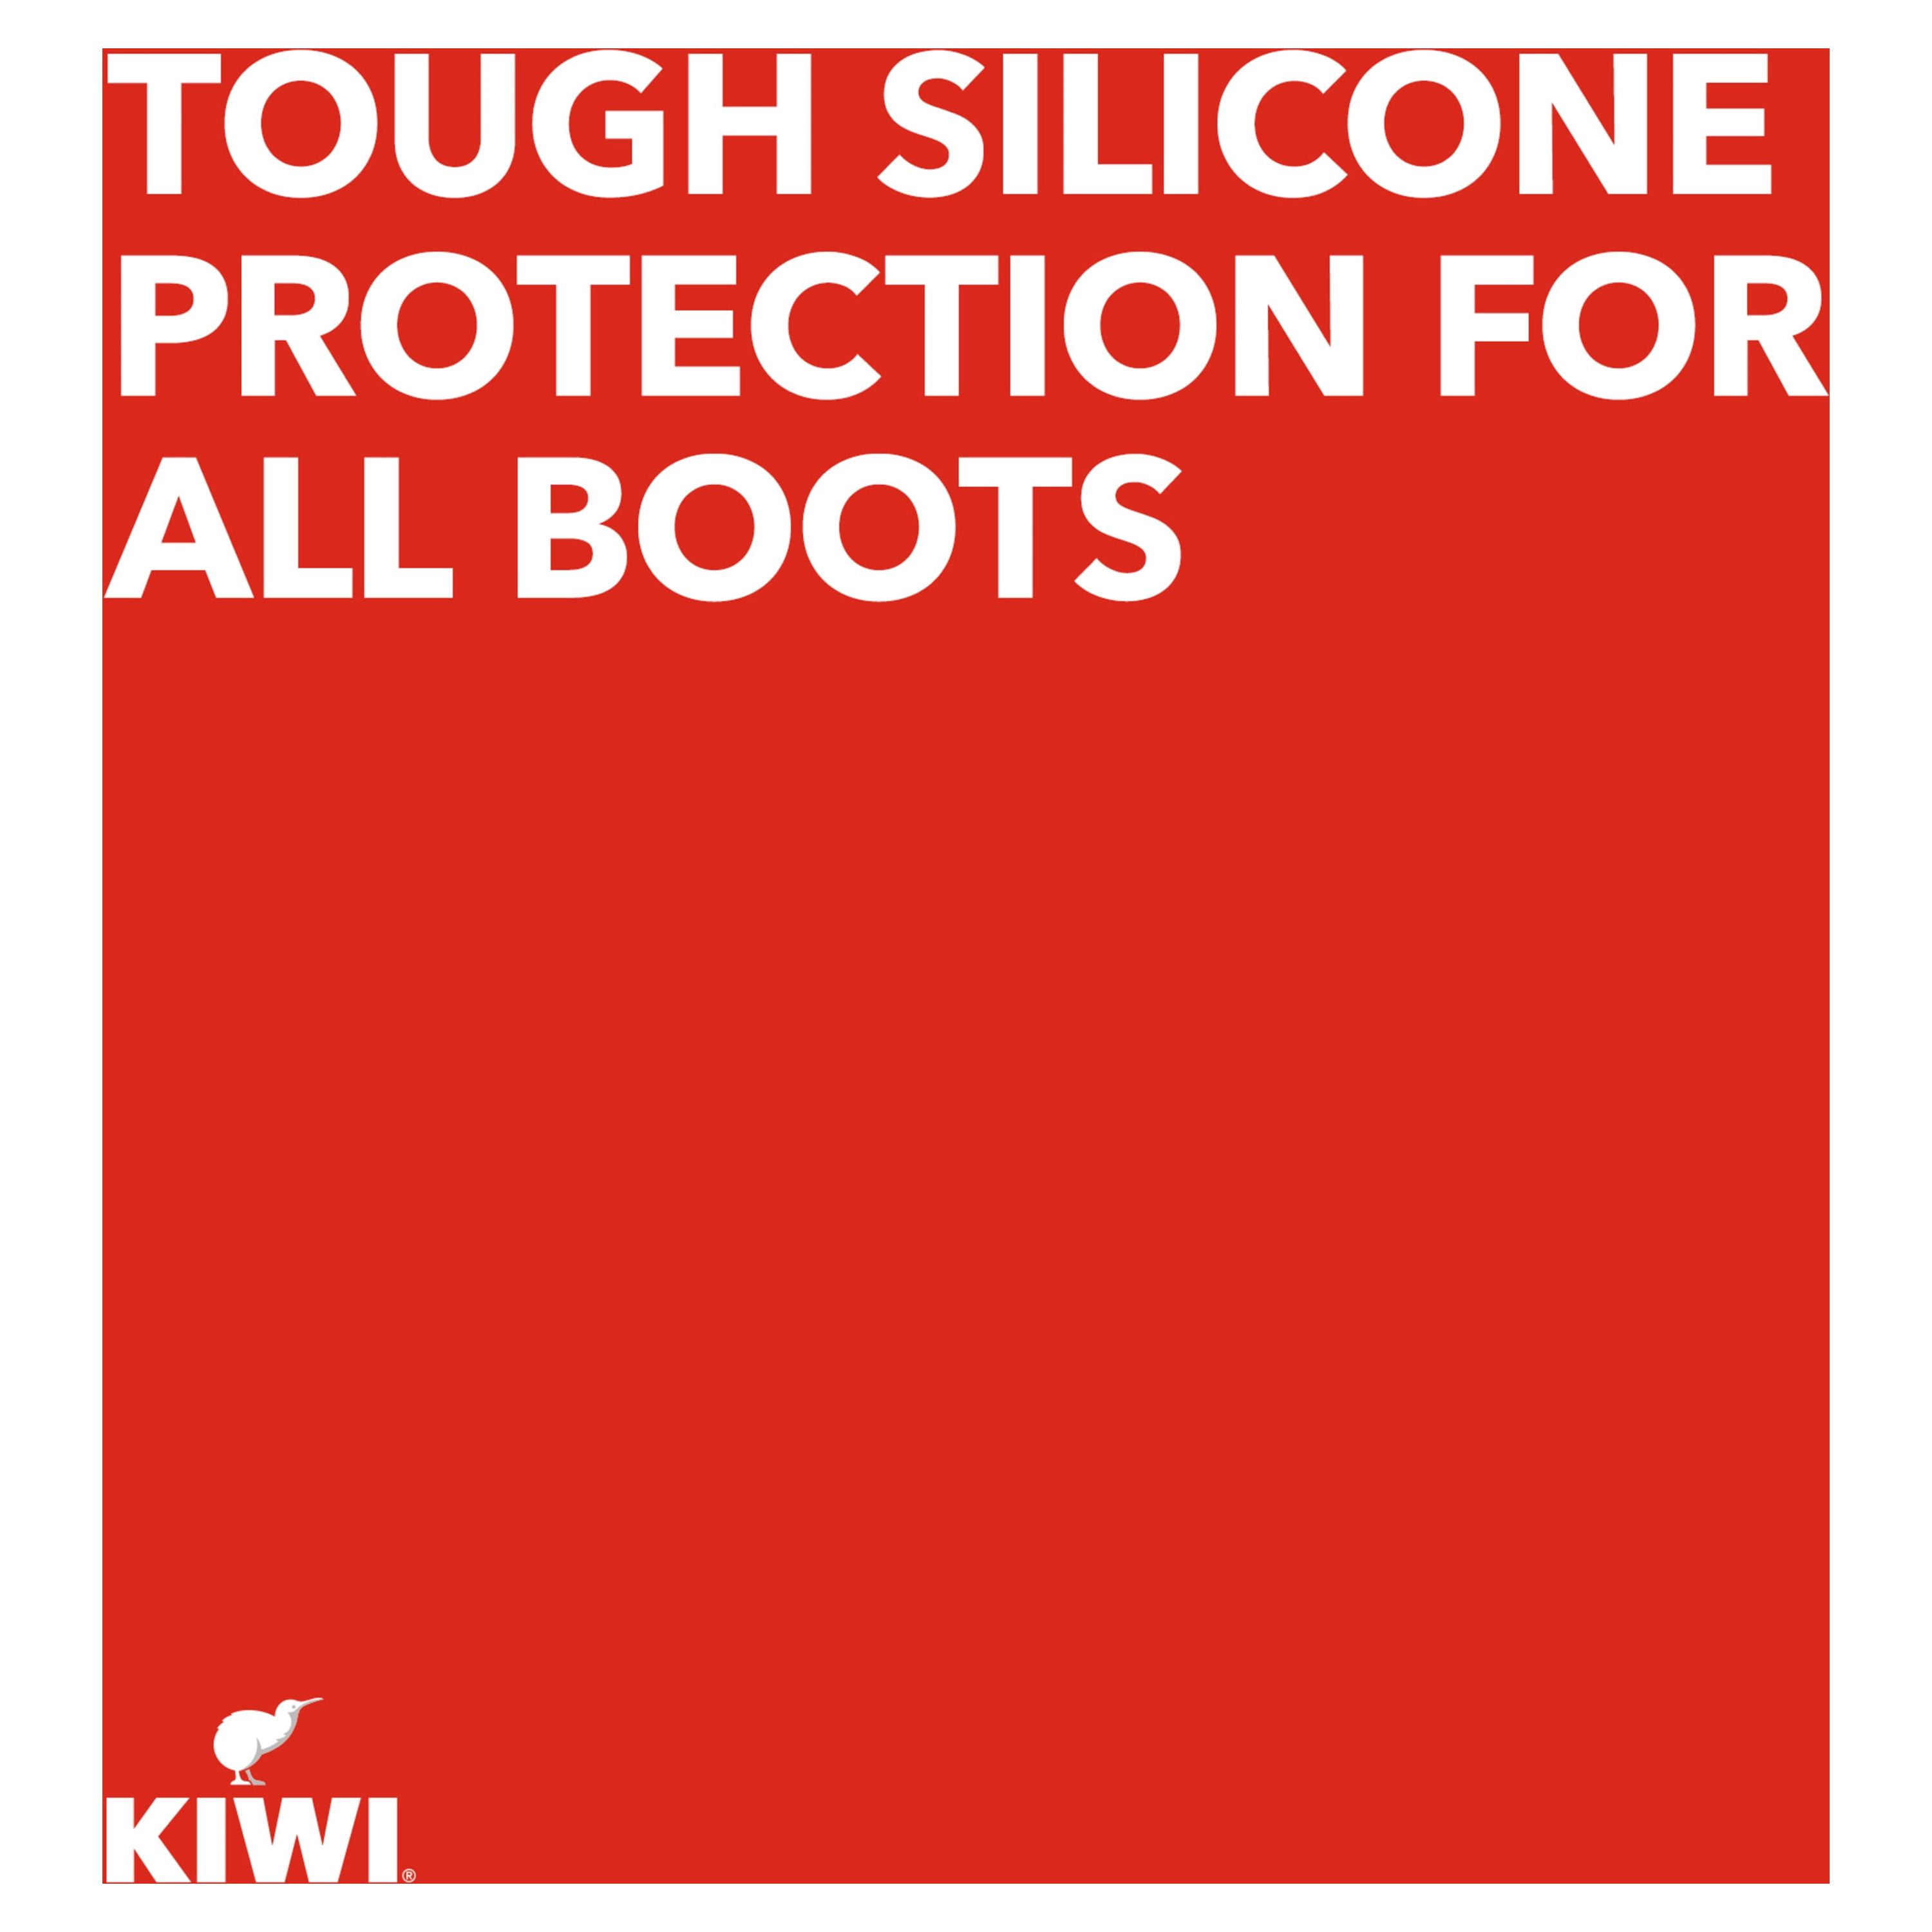 Kiwi Boot Protector 10.5 oz